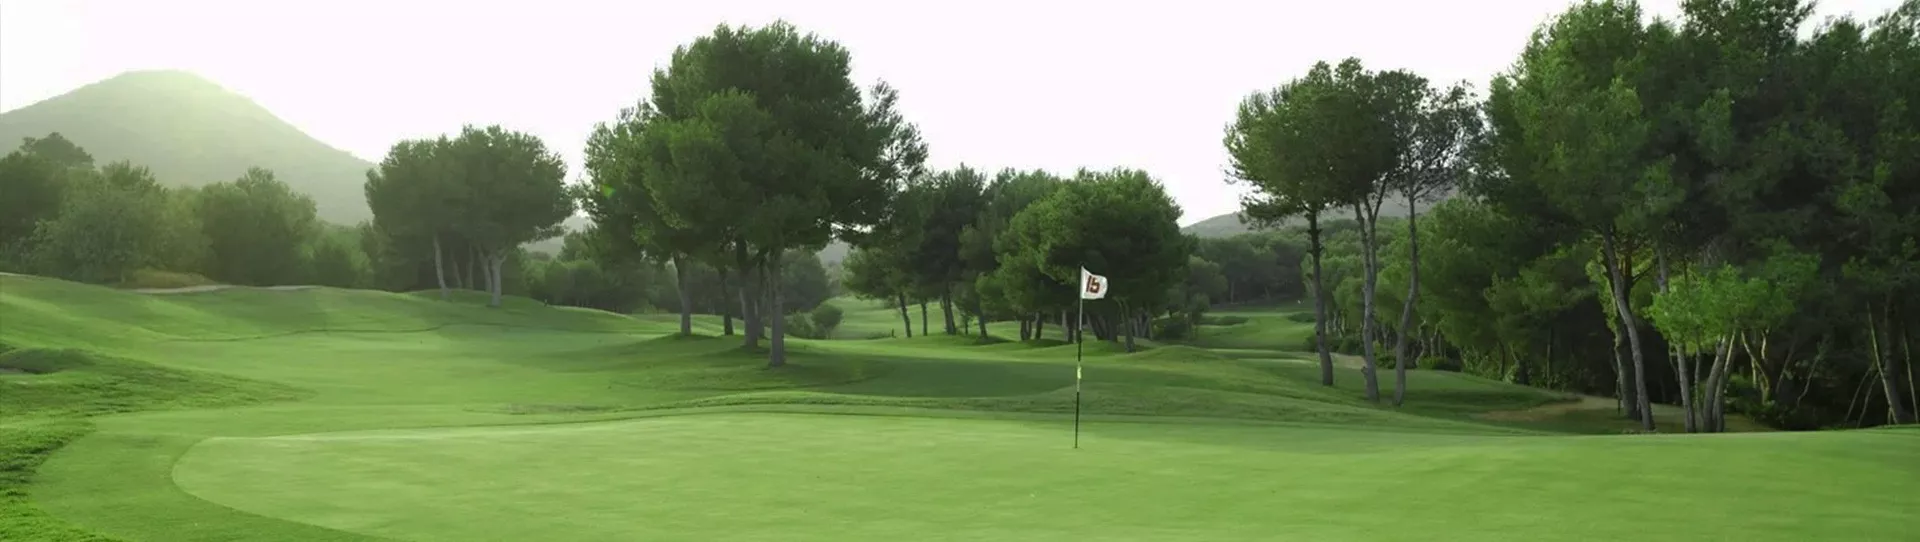 Spain golf courses - La Manga Club Resort West - Photo 4